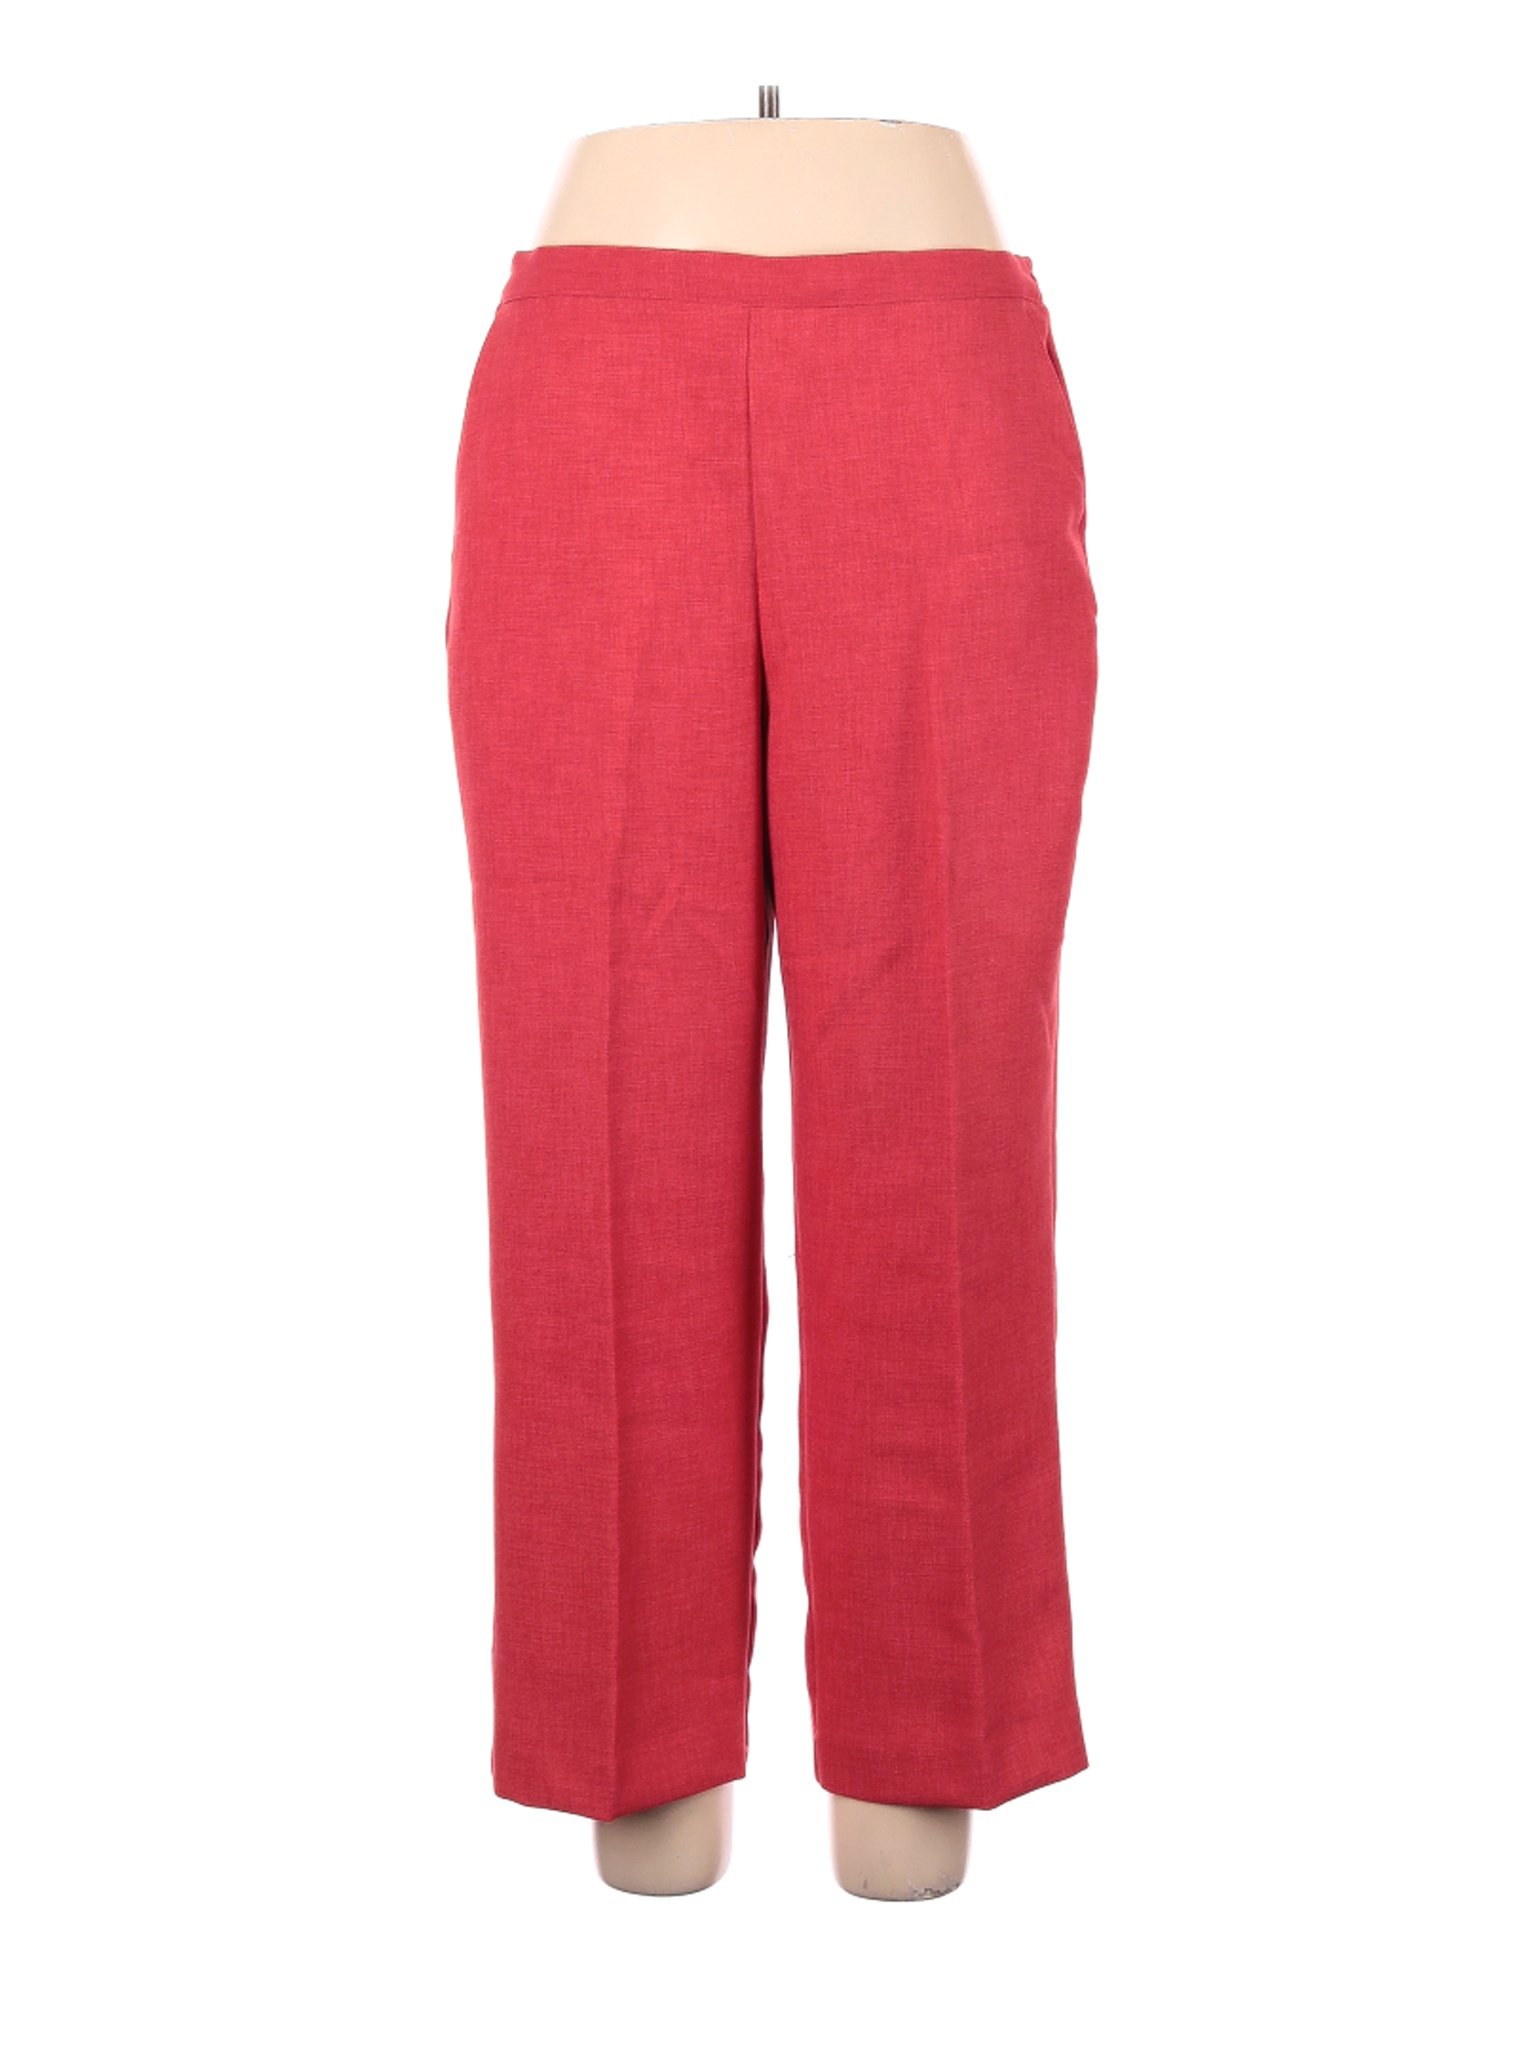 Alfred Dunner Women Red Dress Pants 14 Petites | eBay